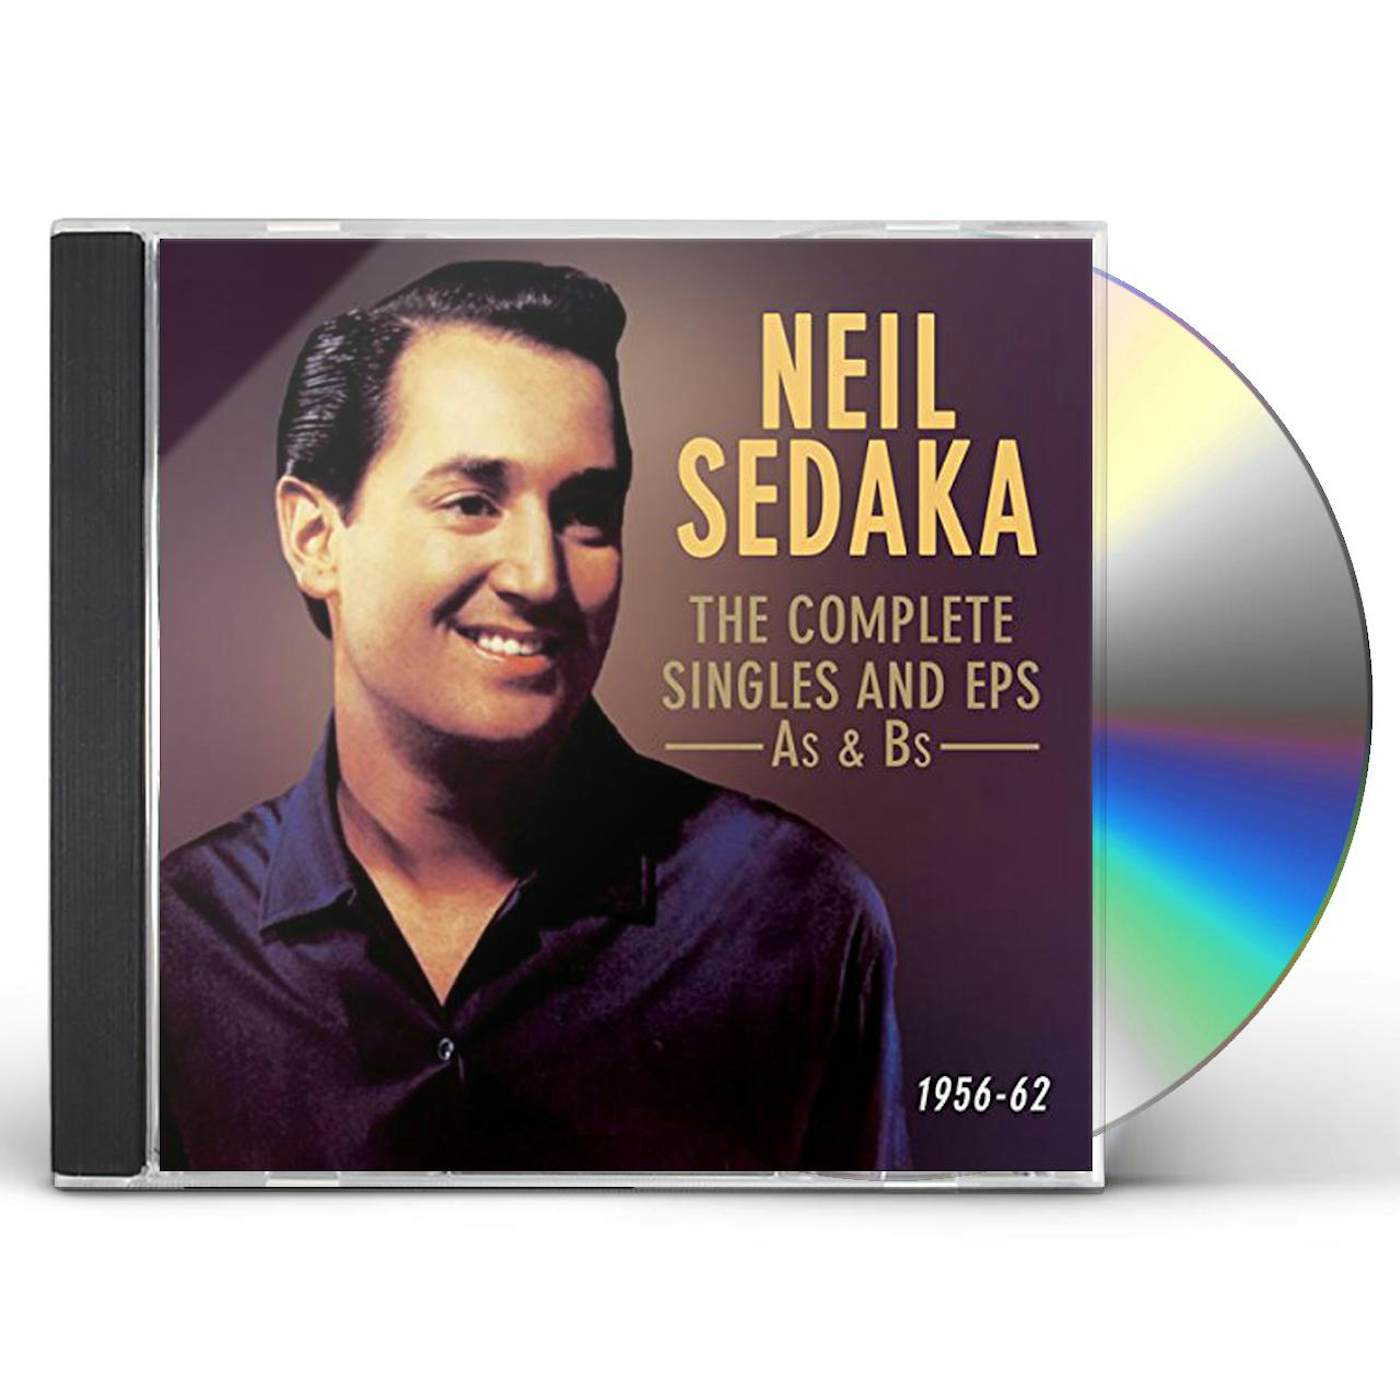 Neil Sedaka COMPLETE US SINGLES & EPS AS & BS 1956-62 CD